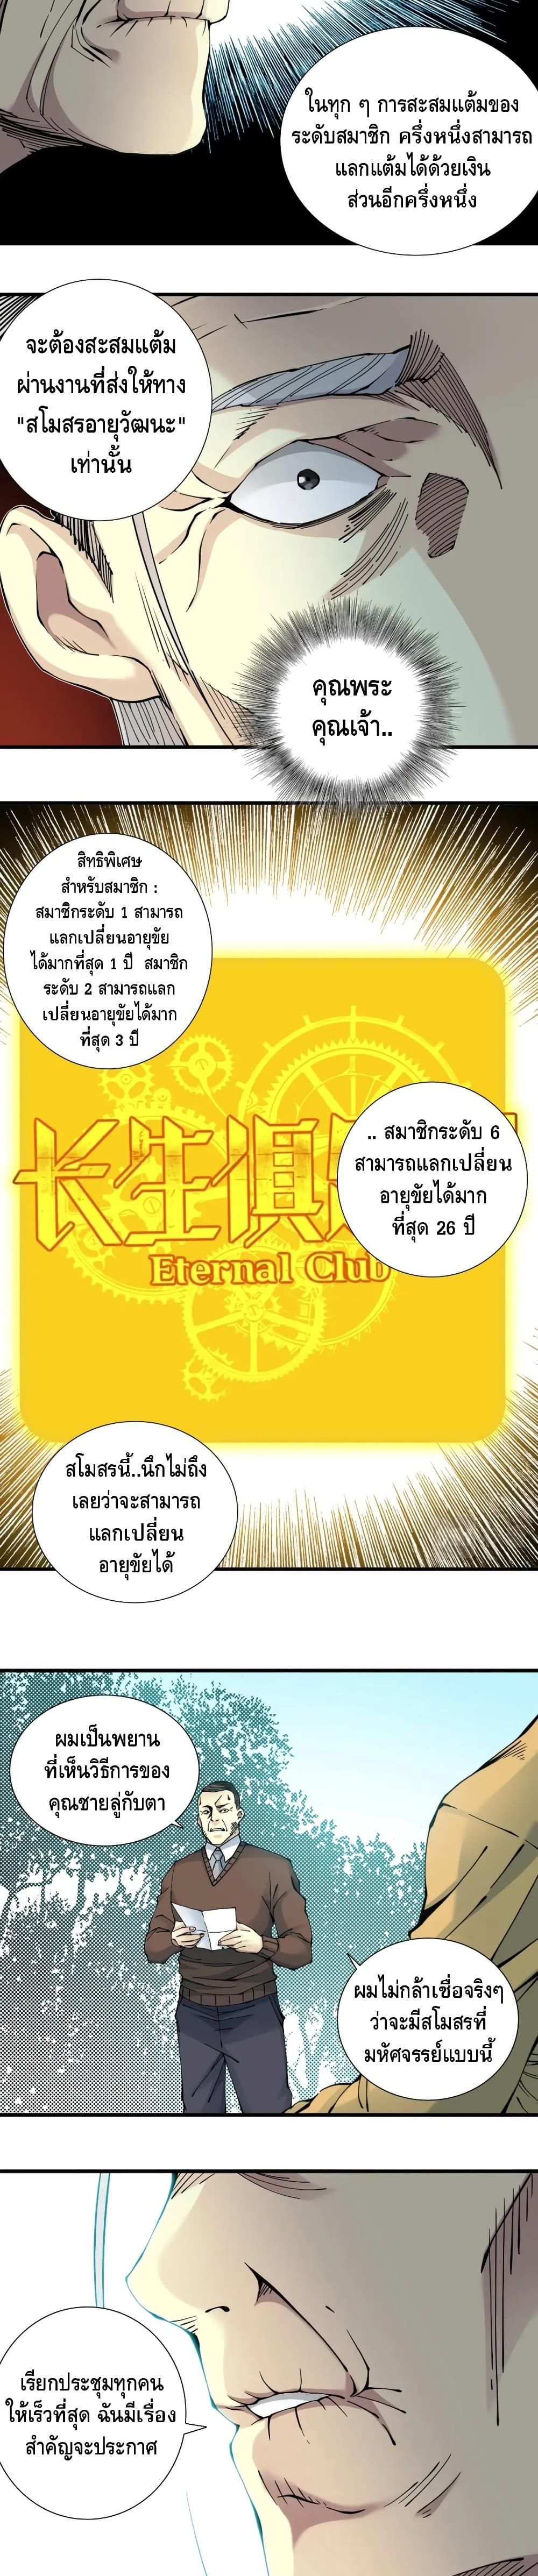 The Eternal Club12 (8)